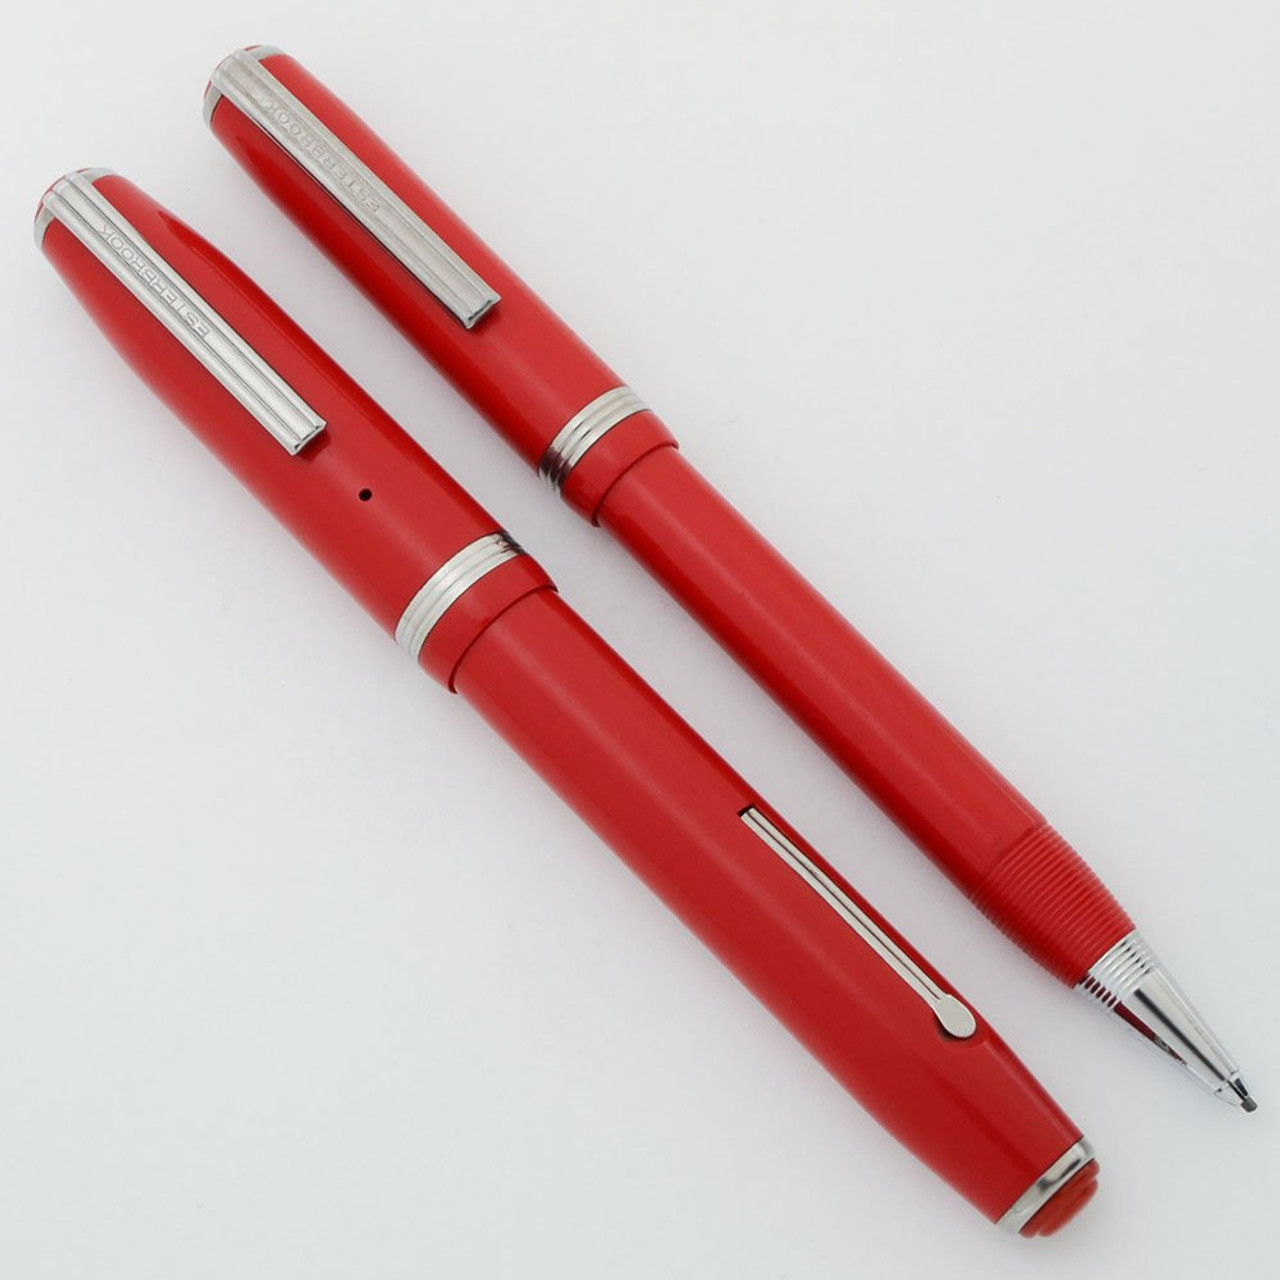 Esterbrook Pastels Fountain Pen Set - Tempo Red, 2nd Series, 9668 Medium Nib (Excellent +, Restored)